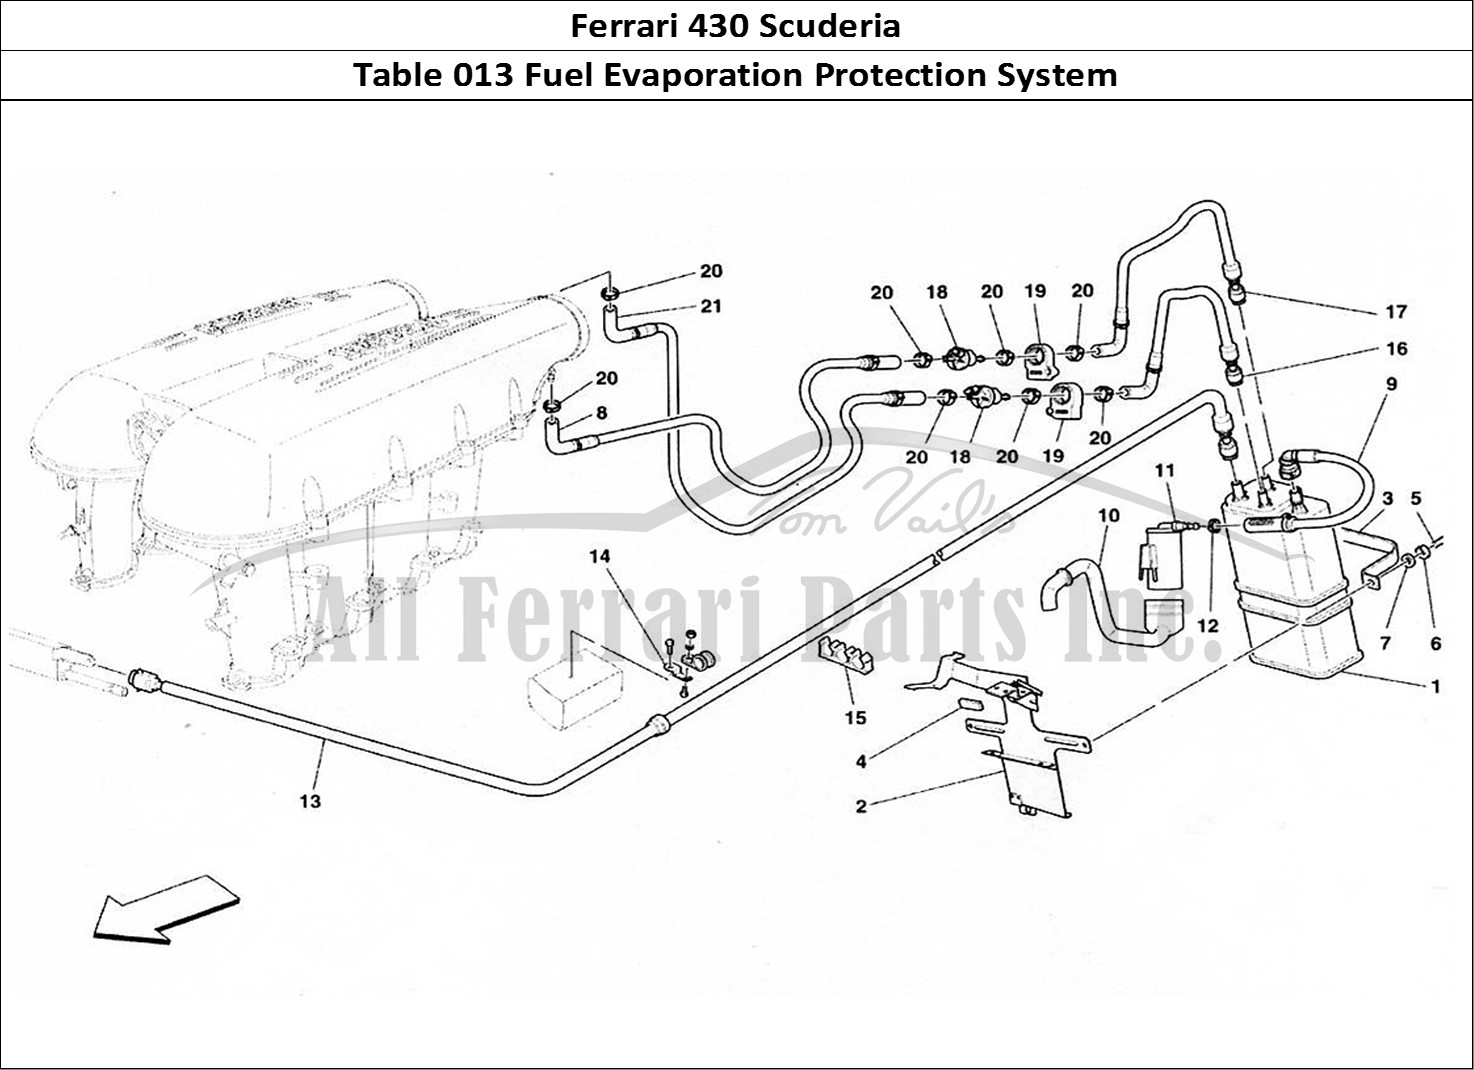 Ferrari Parts Ferrari 430 Scuderia Page 013 Antievaporation Device